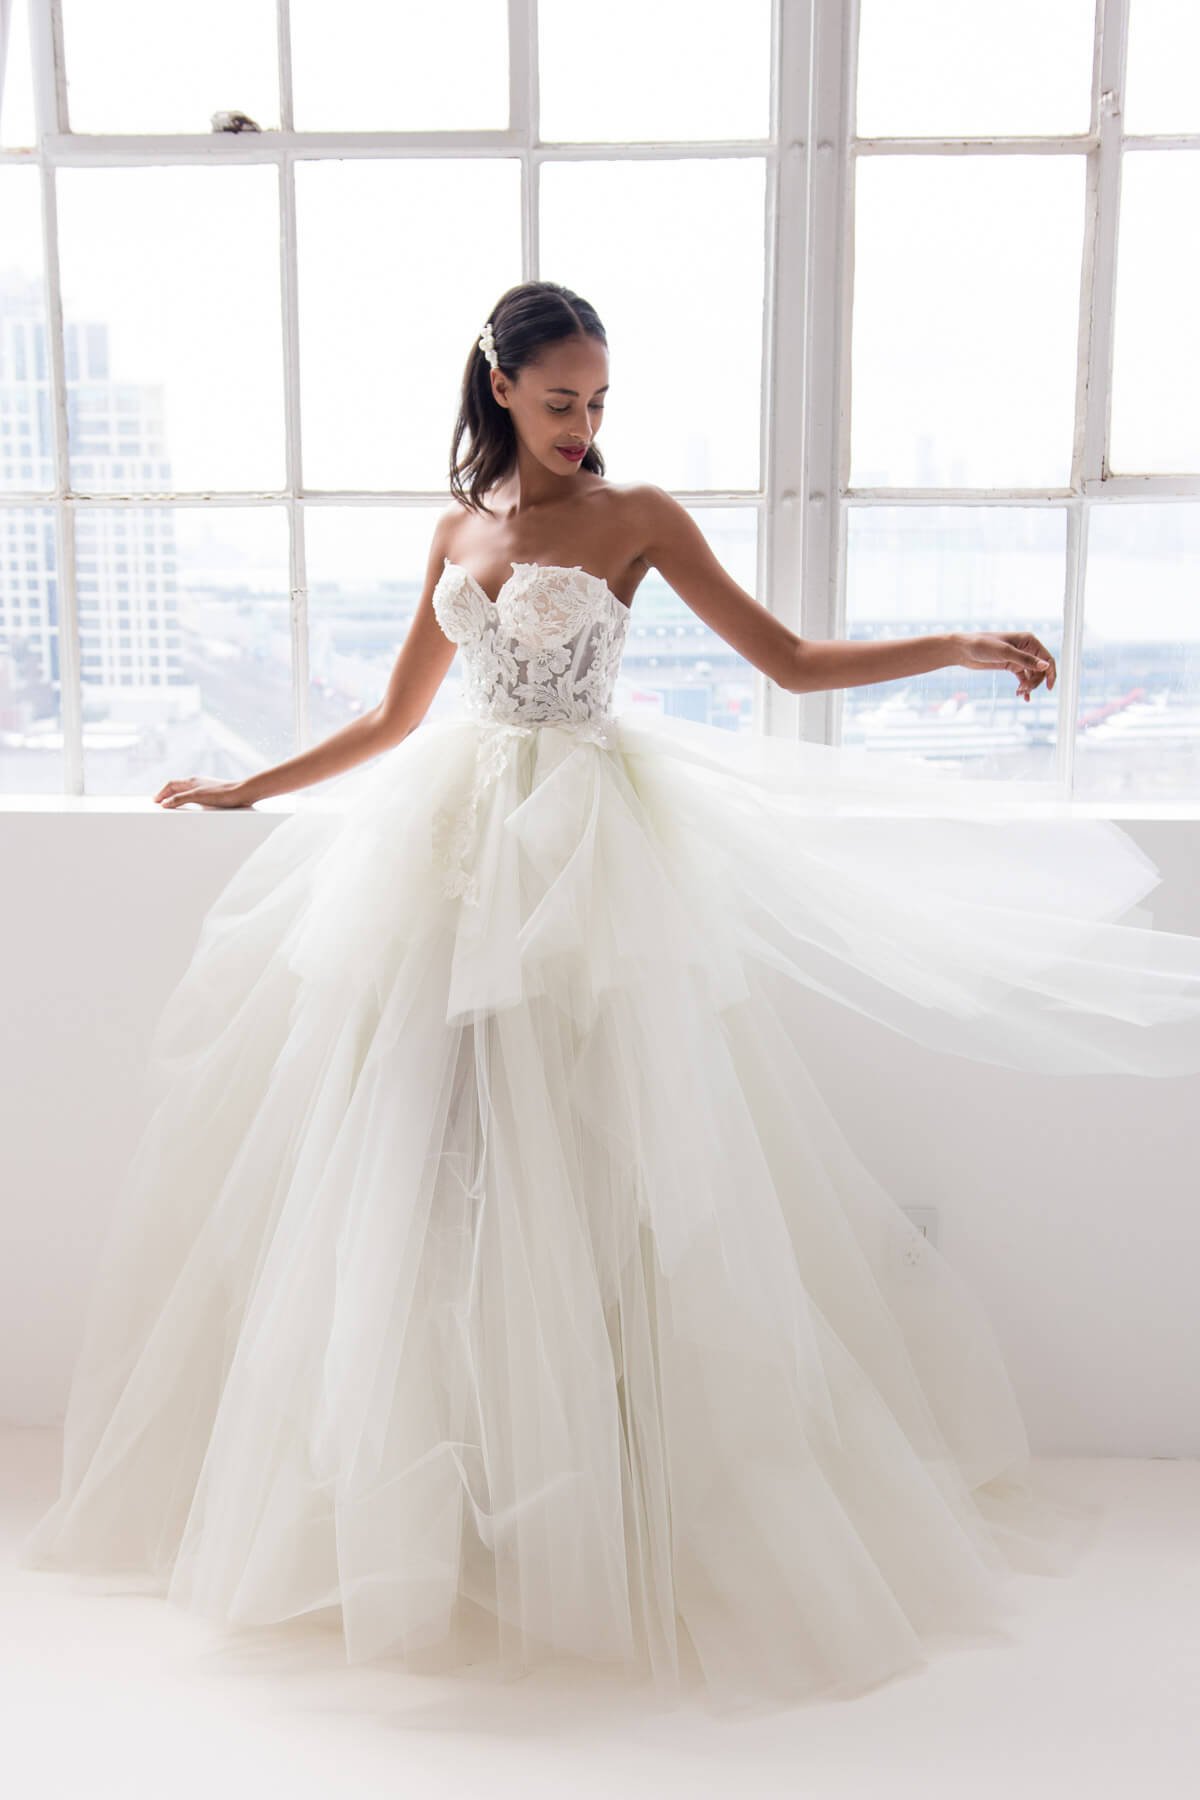 Morgan Newsom Galia Lahav wedding dress designer New York photographer-0734.jpg